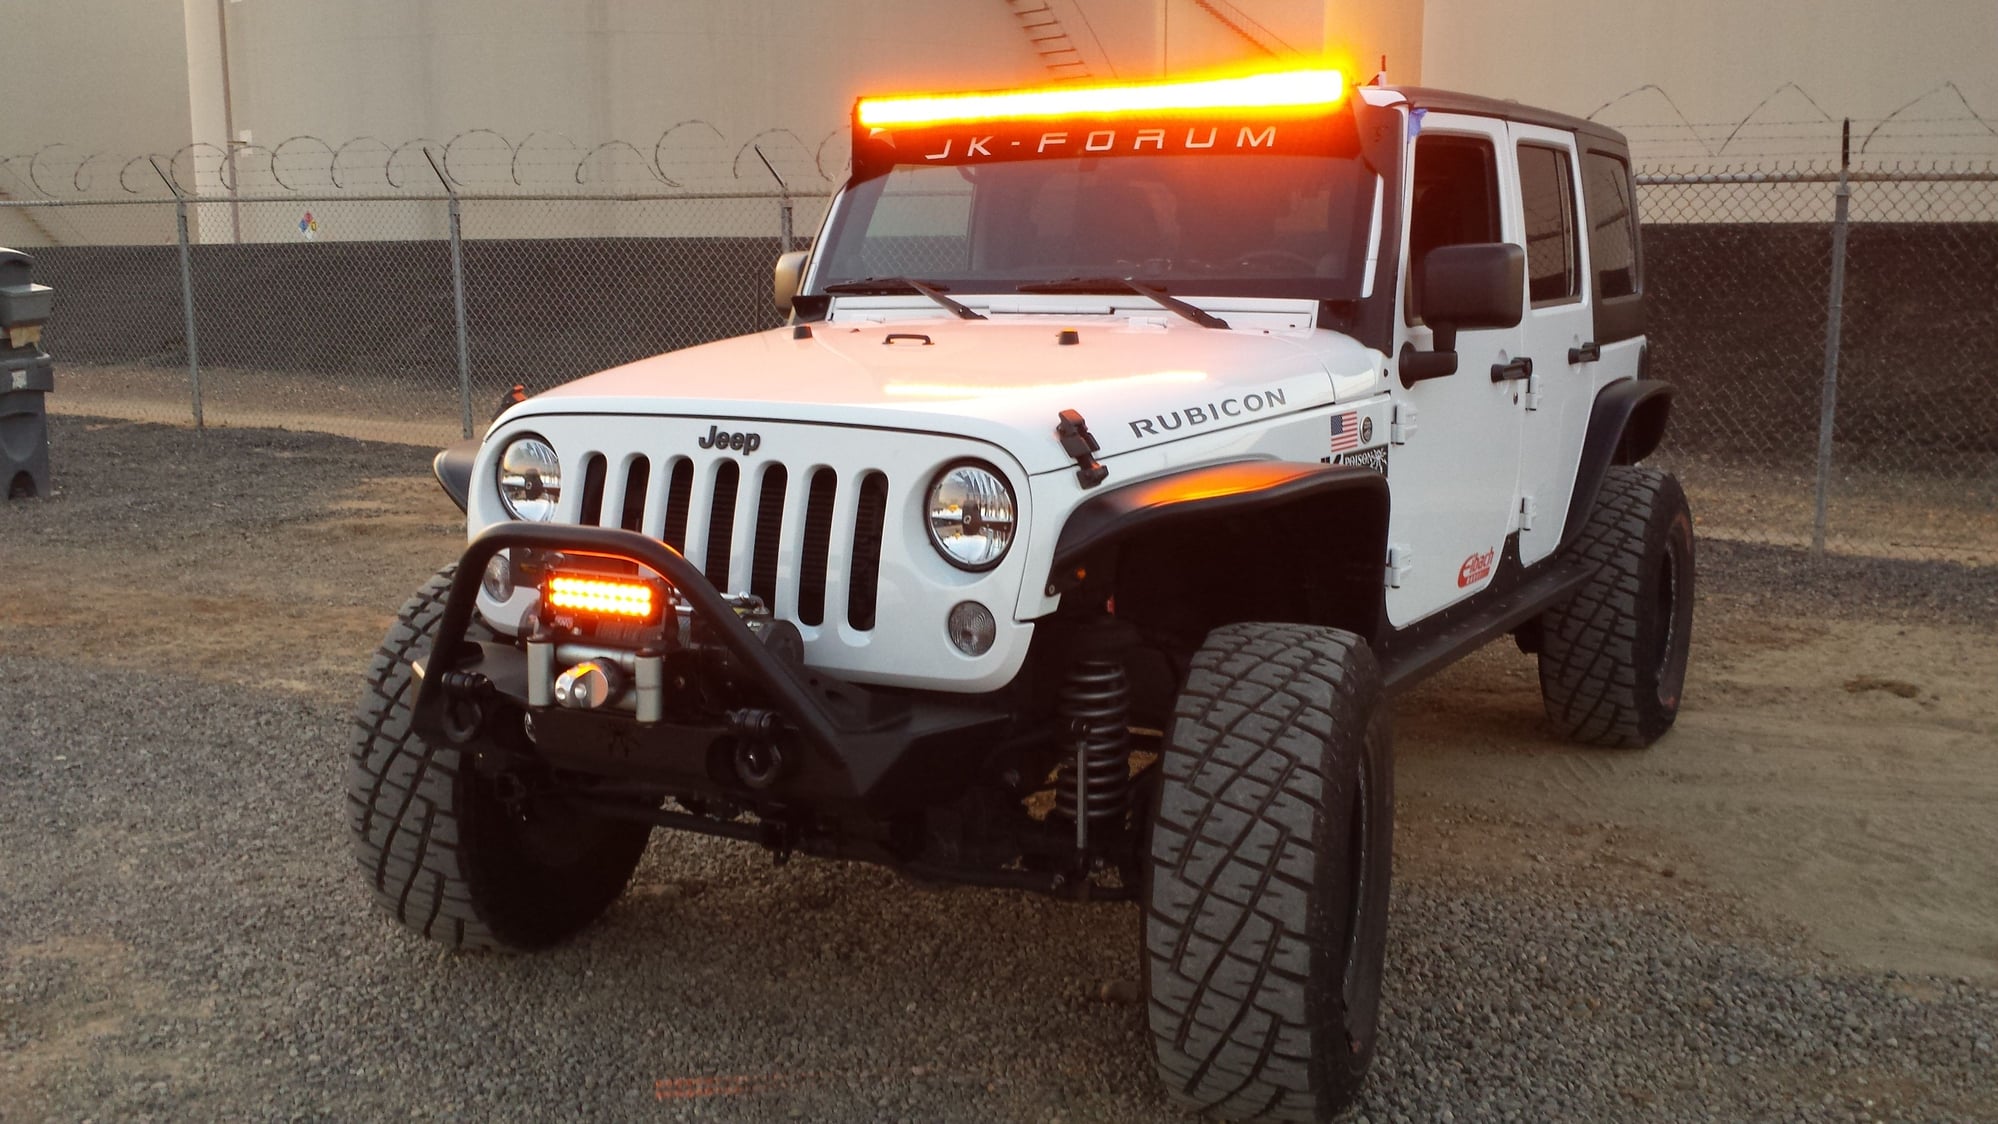 2013 Jeep Wrangler - '13 jkur  -  $45,678.90 - Used - VIN 1C4BJWFG3DL526897 - 90,750 Miles - 6 cyl - 4WD - Automatic - White - Anaheim, CA 92805, United States